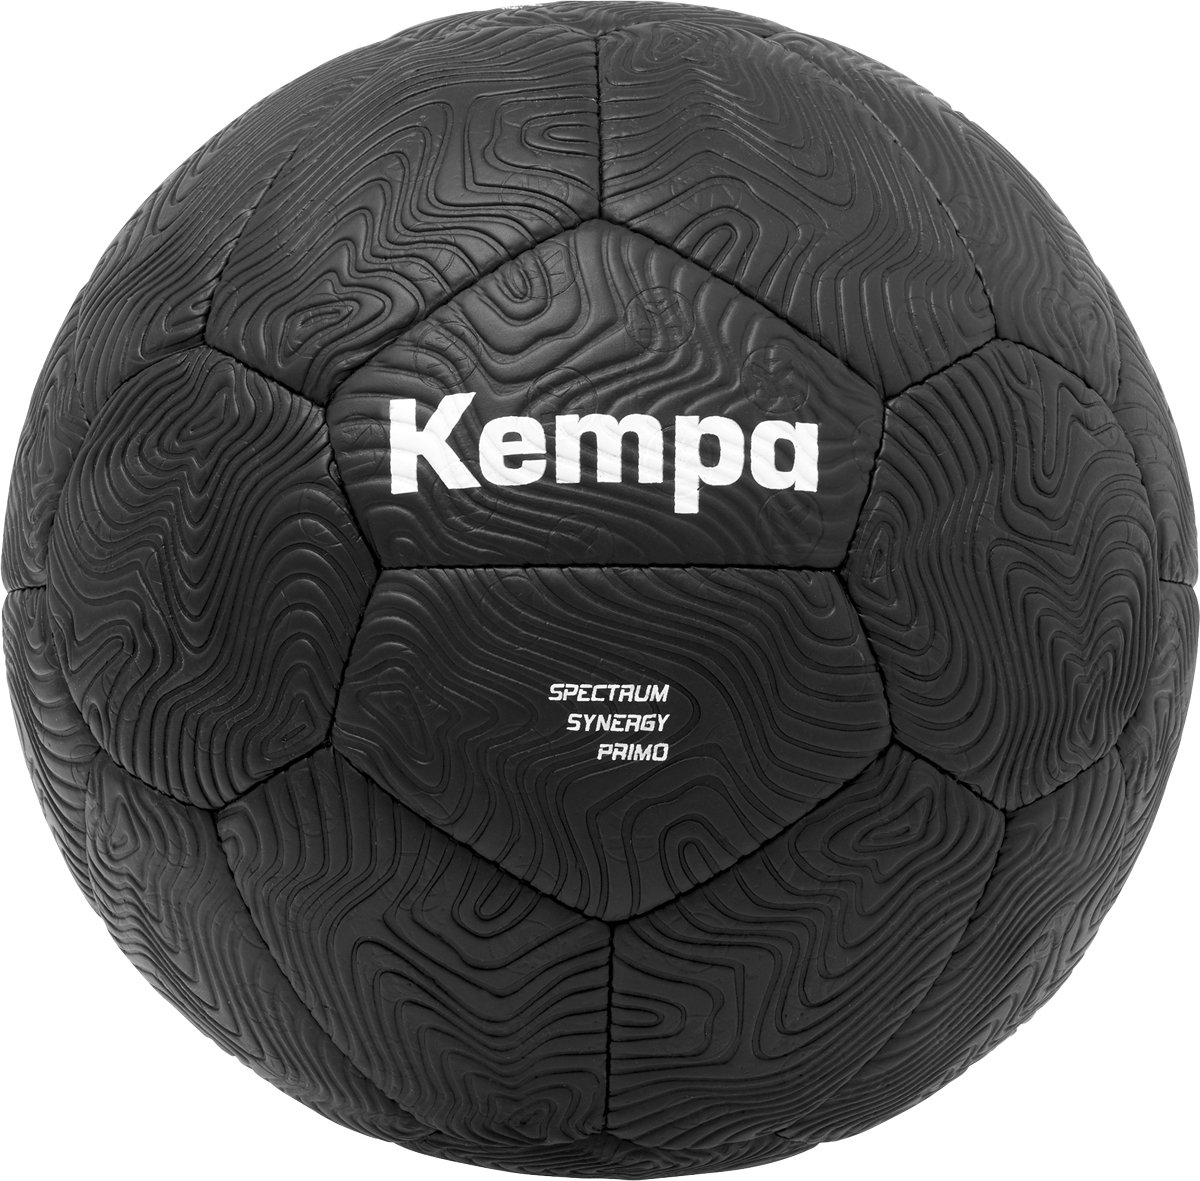 Kempa Black and White Synergy Spectrum Primo Handbal Maat Mt. 2